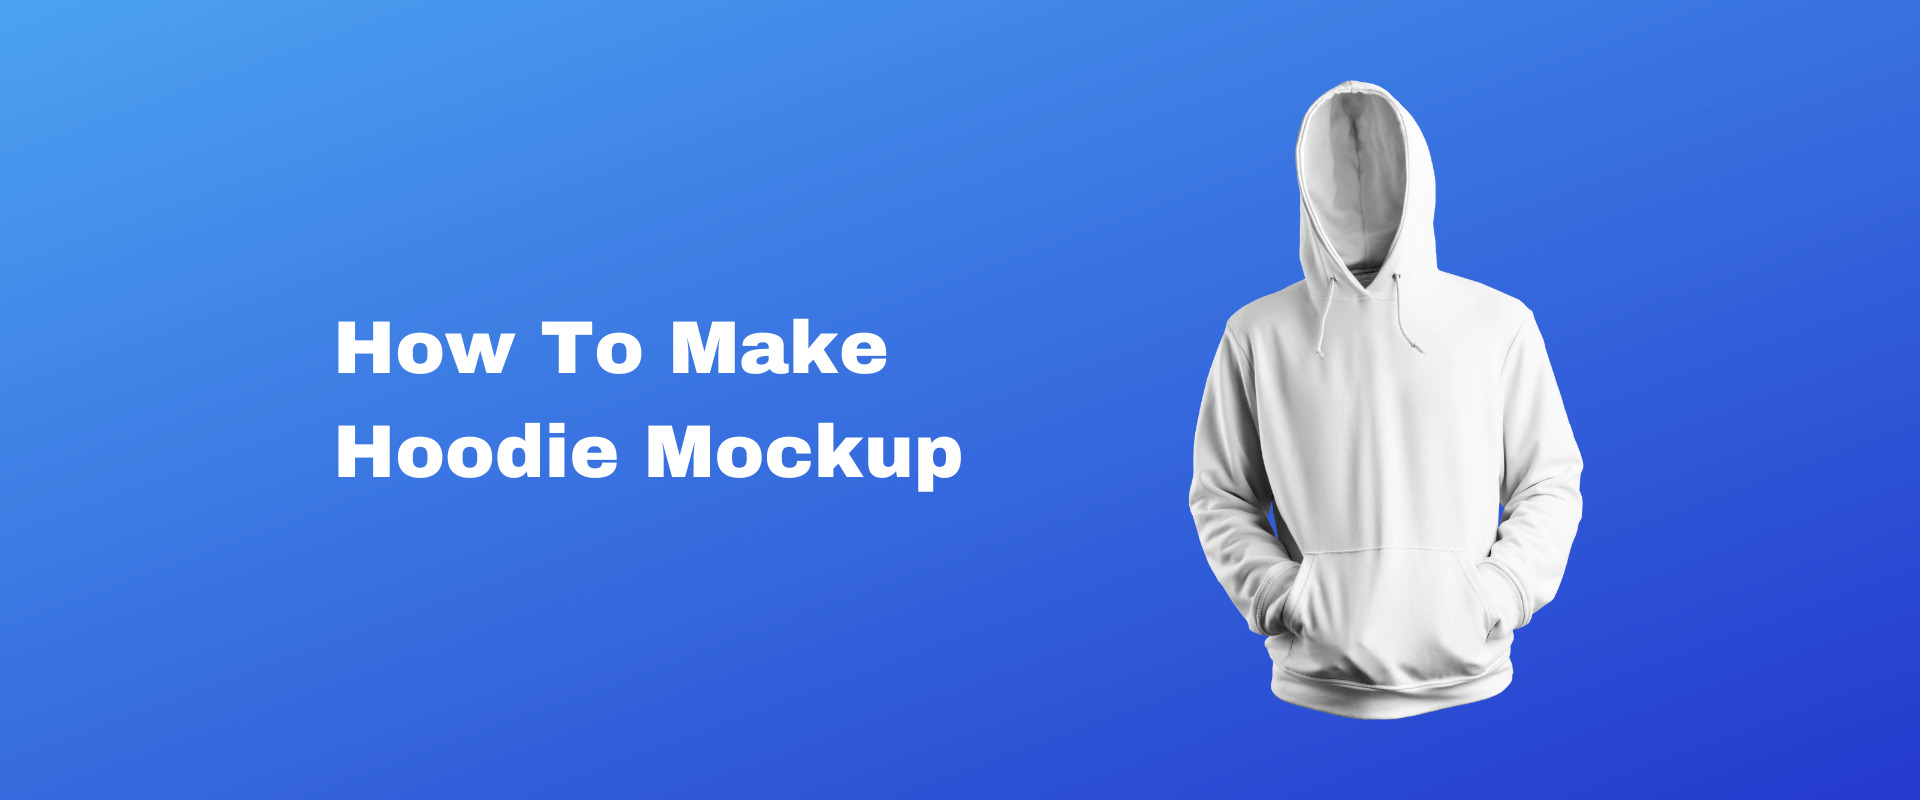 How To Make Hoodie Mockup (3 Easy Steps)